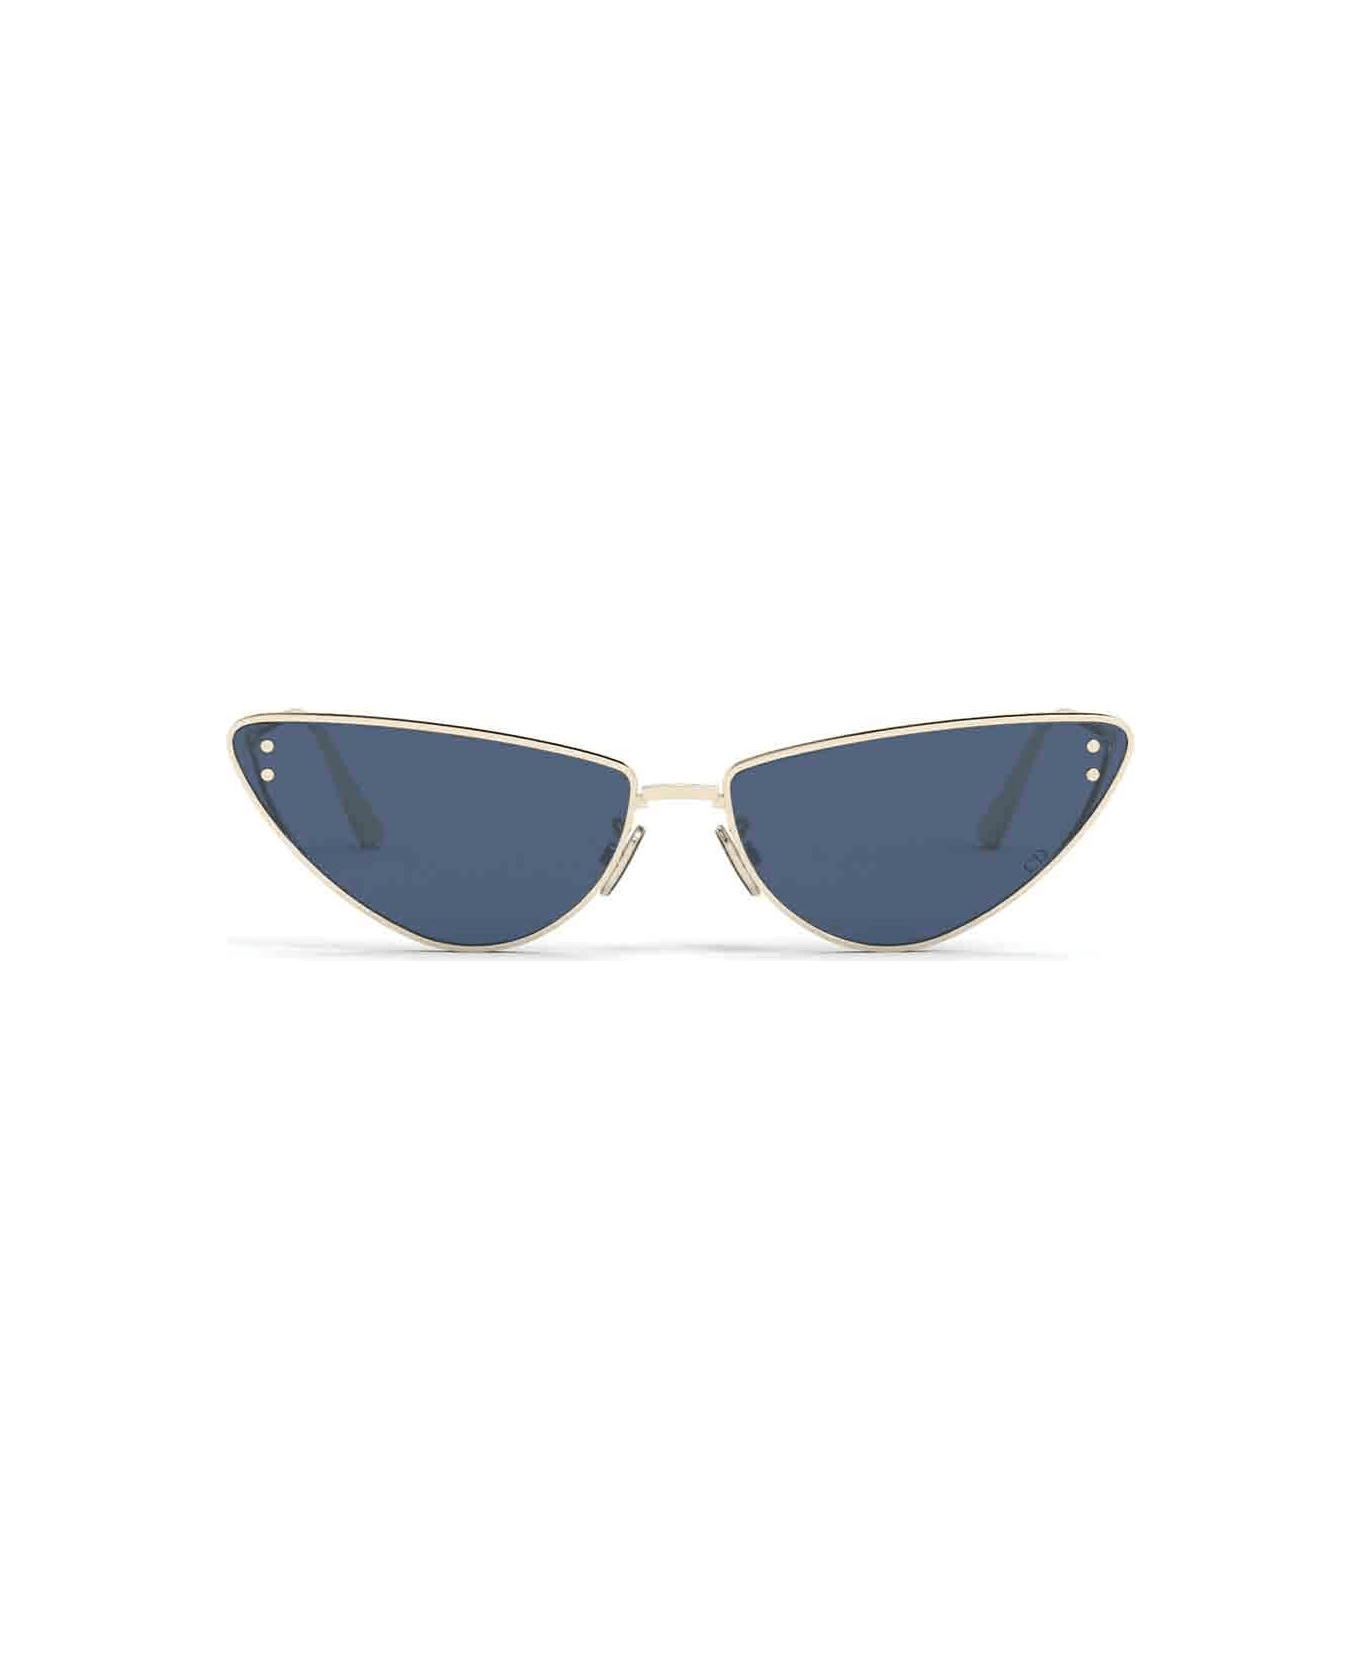 Dior Eyewear Sunglasses - Oro/Blu